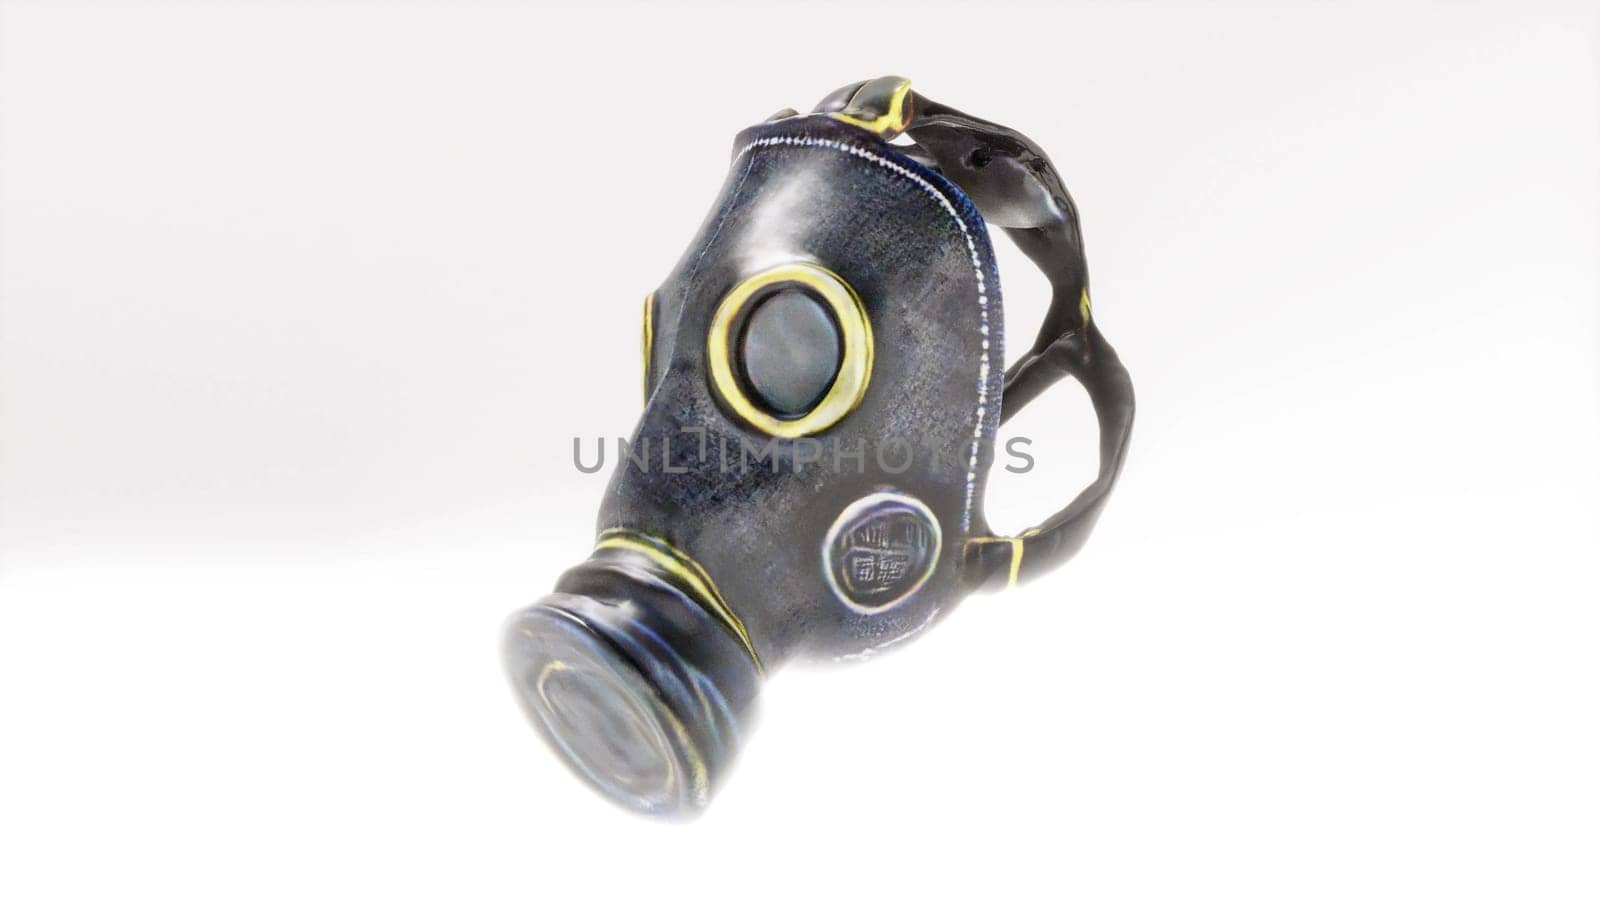 Military gas mask for protection on white bg 3d render